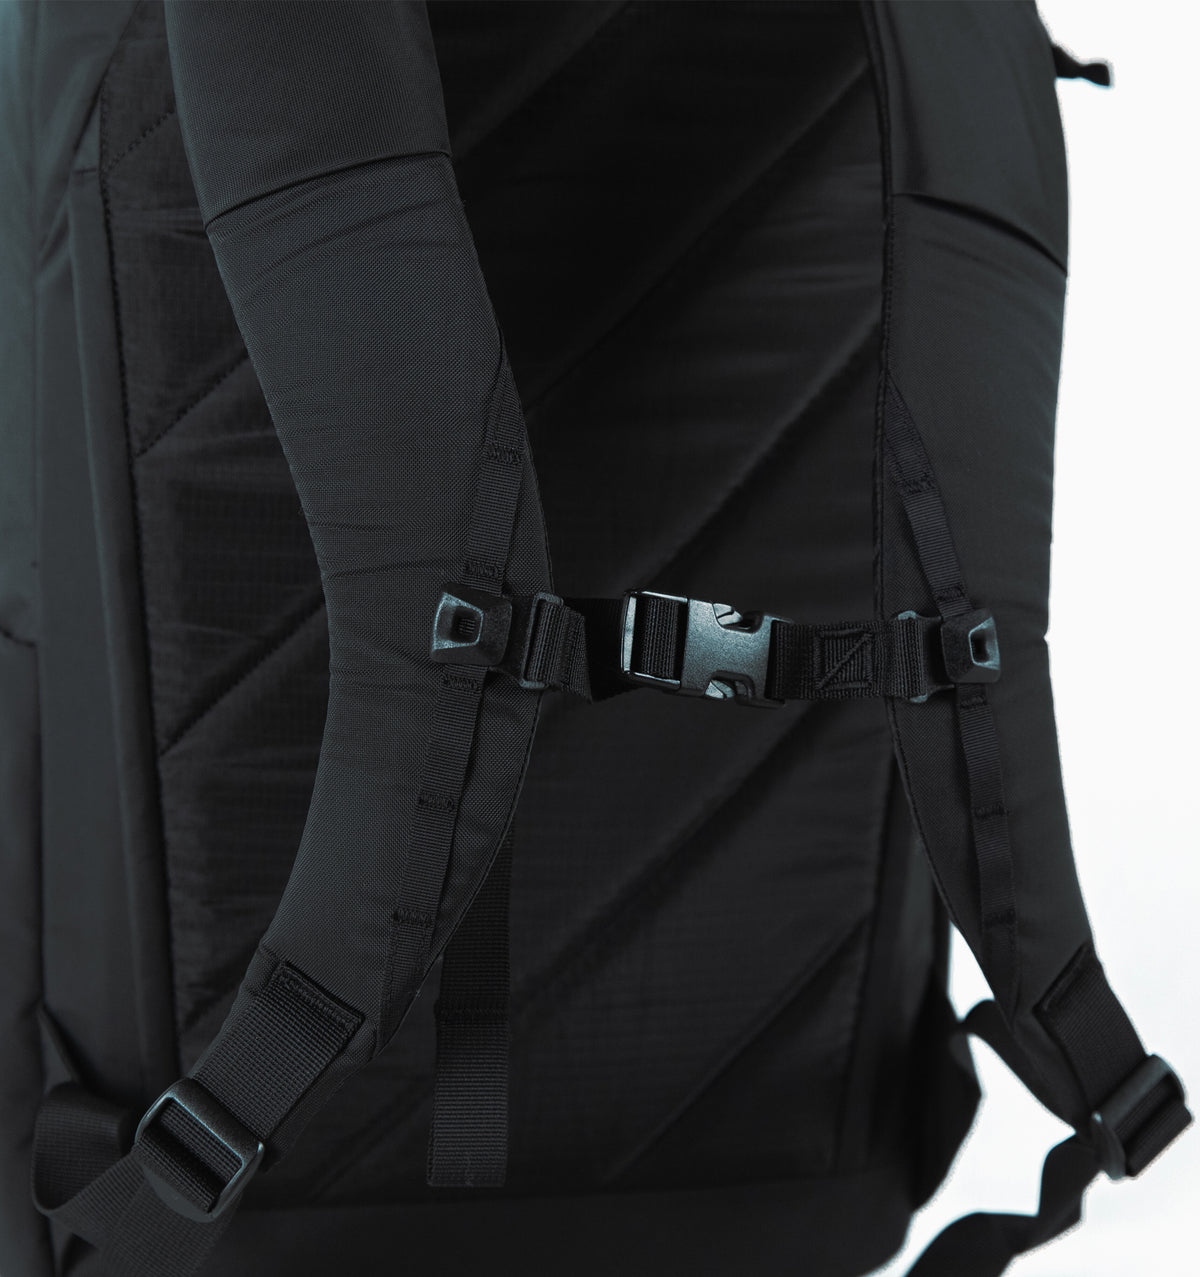 Evergoods 16" Civic Travel Bag 26L - Solution Dyed Black